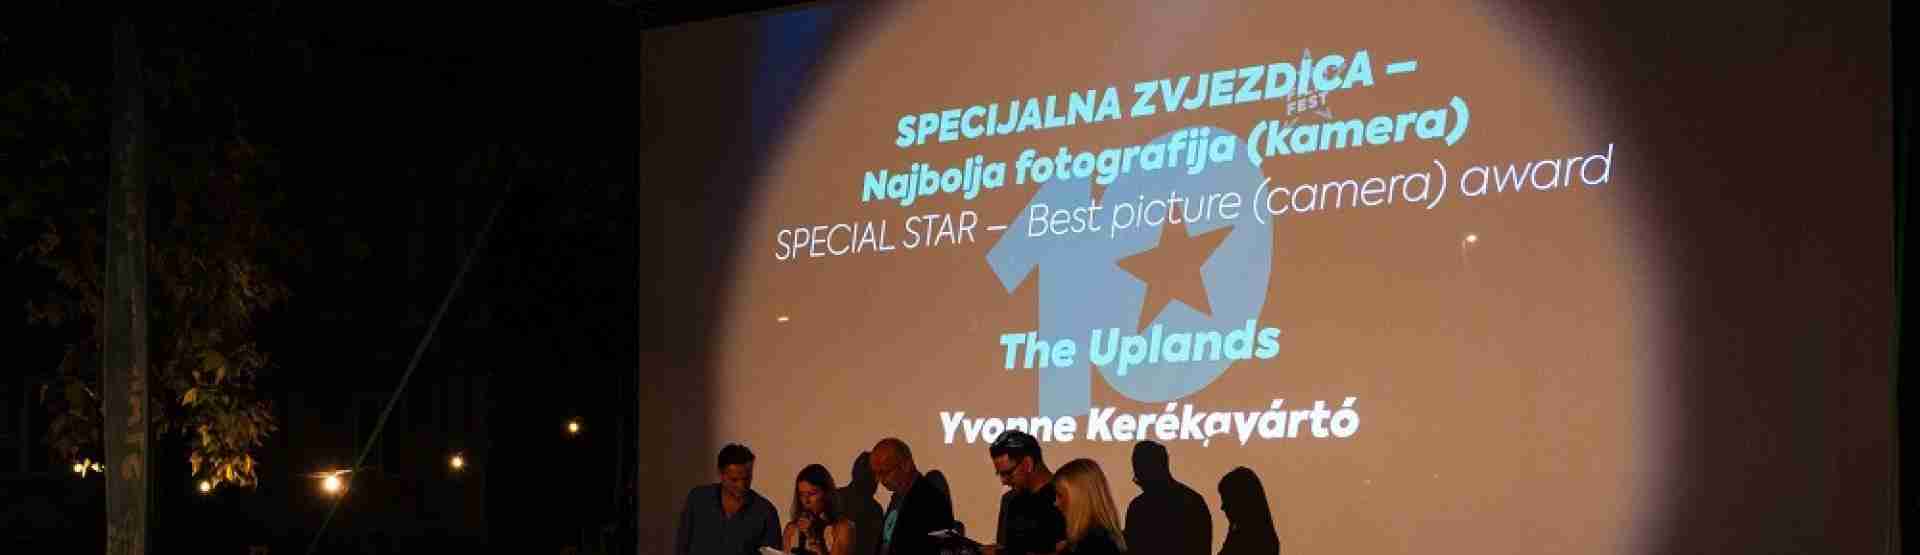 FIlm "The Uplands" mađarske redateljice Yvonne Kerékgyártó osvojio nagradu za najbolju kameru na sisačkom Star Film Festu